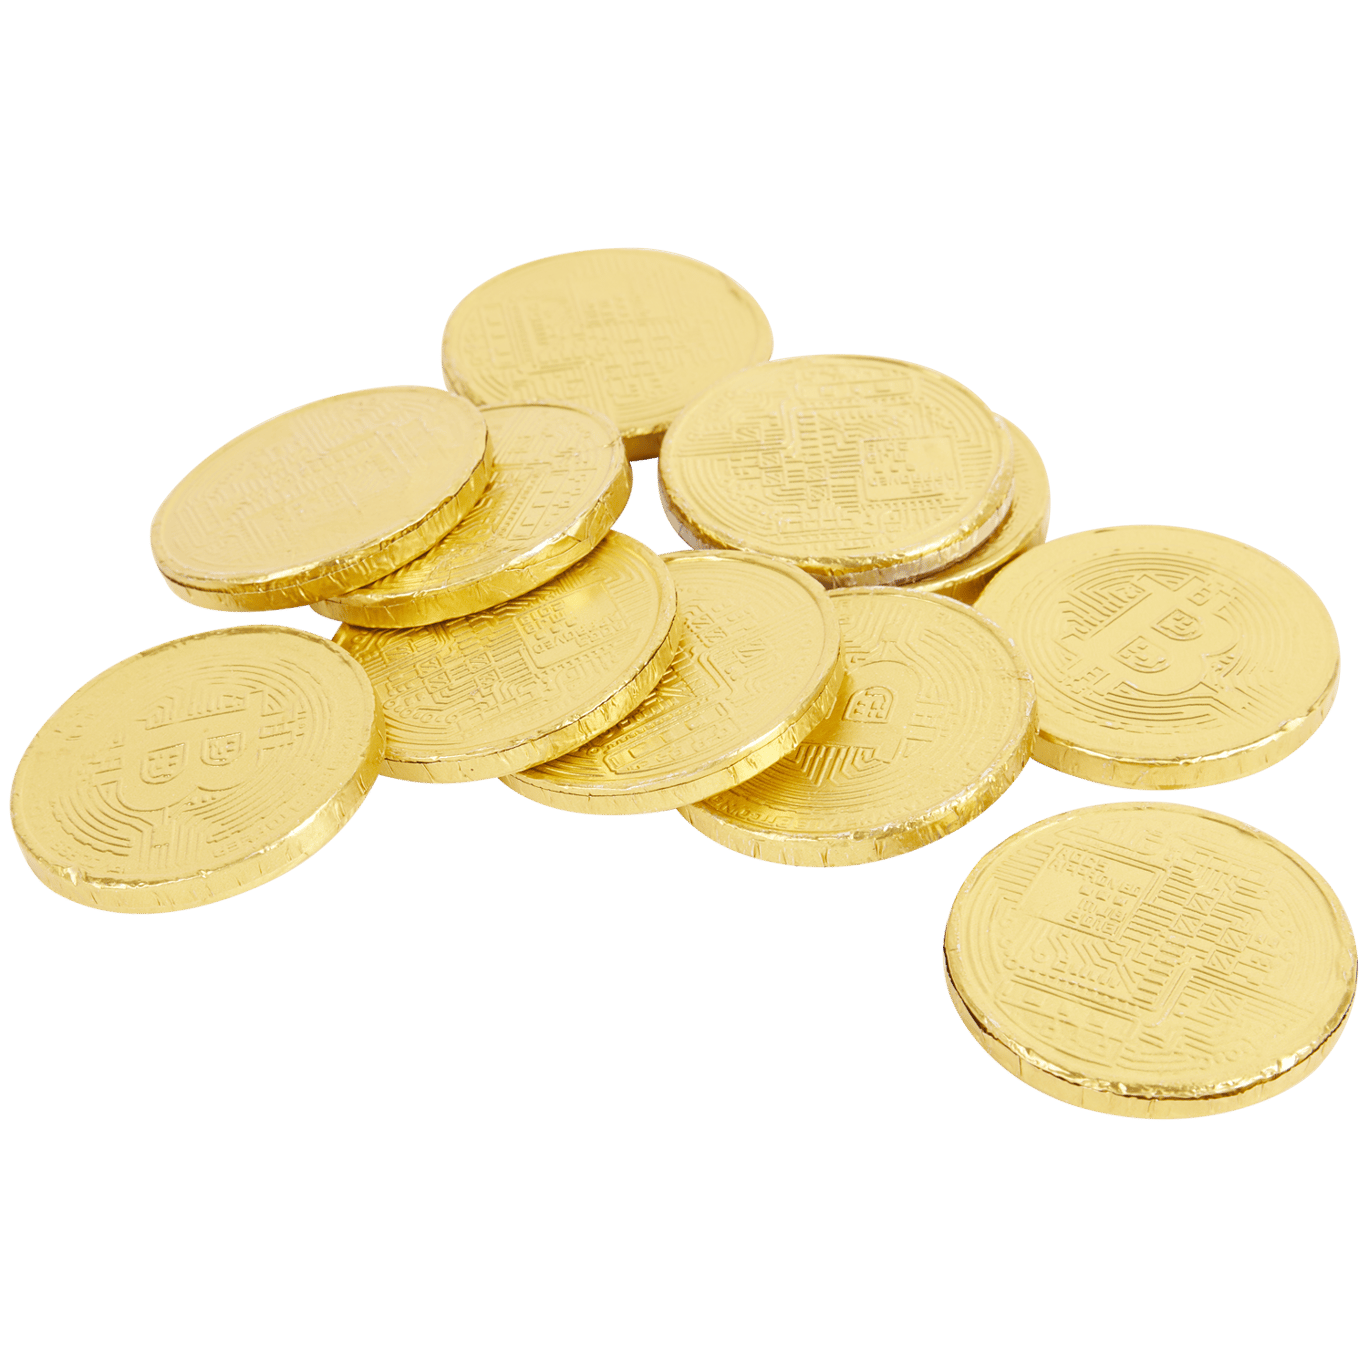 Schokoladenmünzen Bitcoin